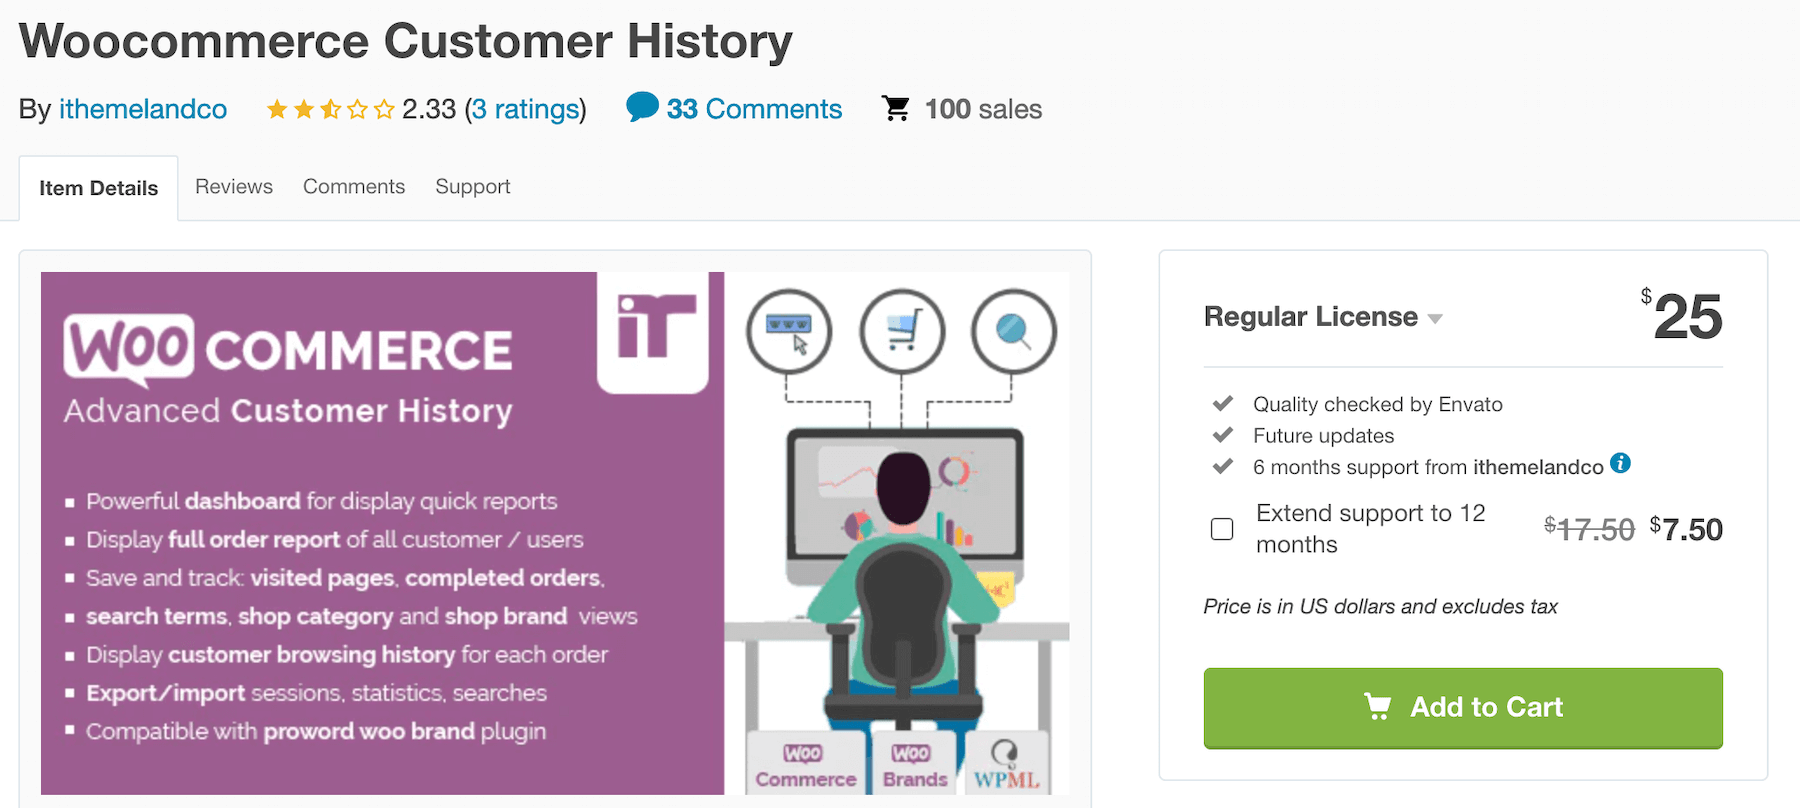 Woocommerce Customer History